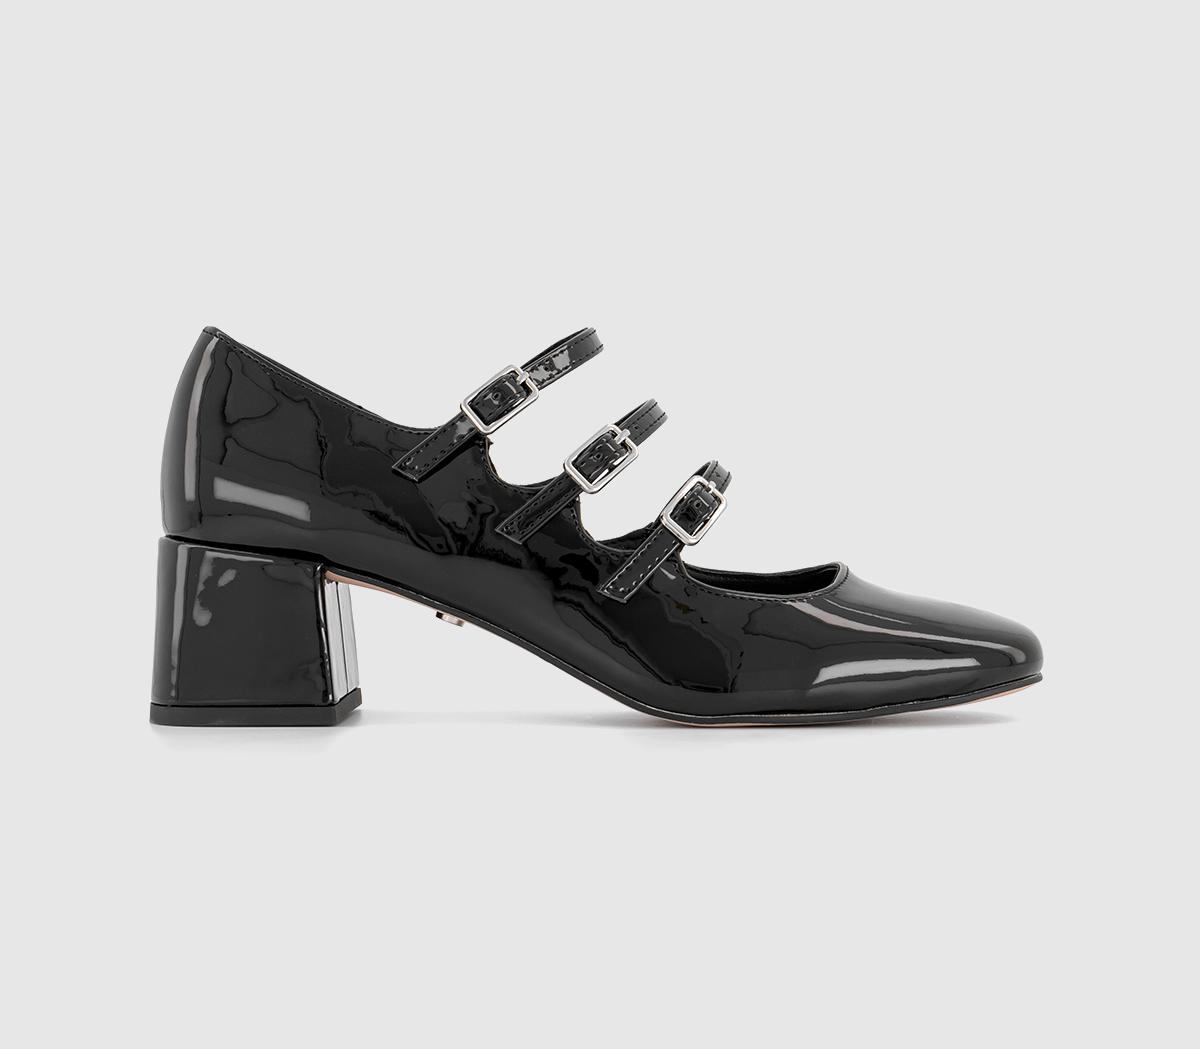 Marvellous Triple Stap Mary Jane Block Heel Black Patent